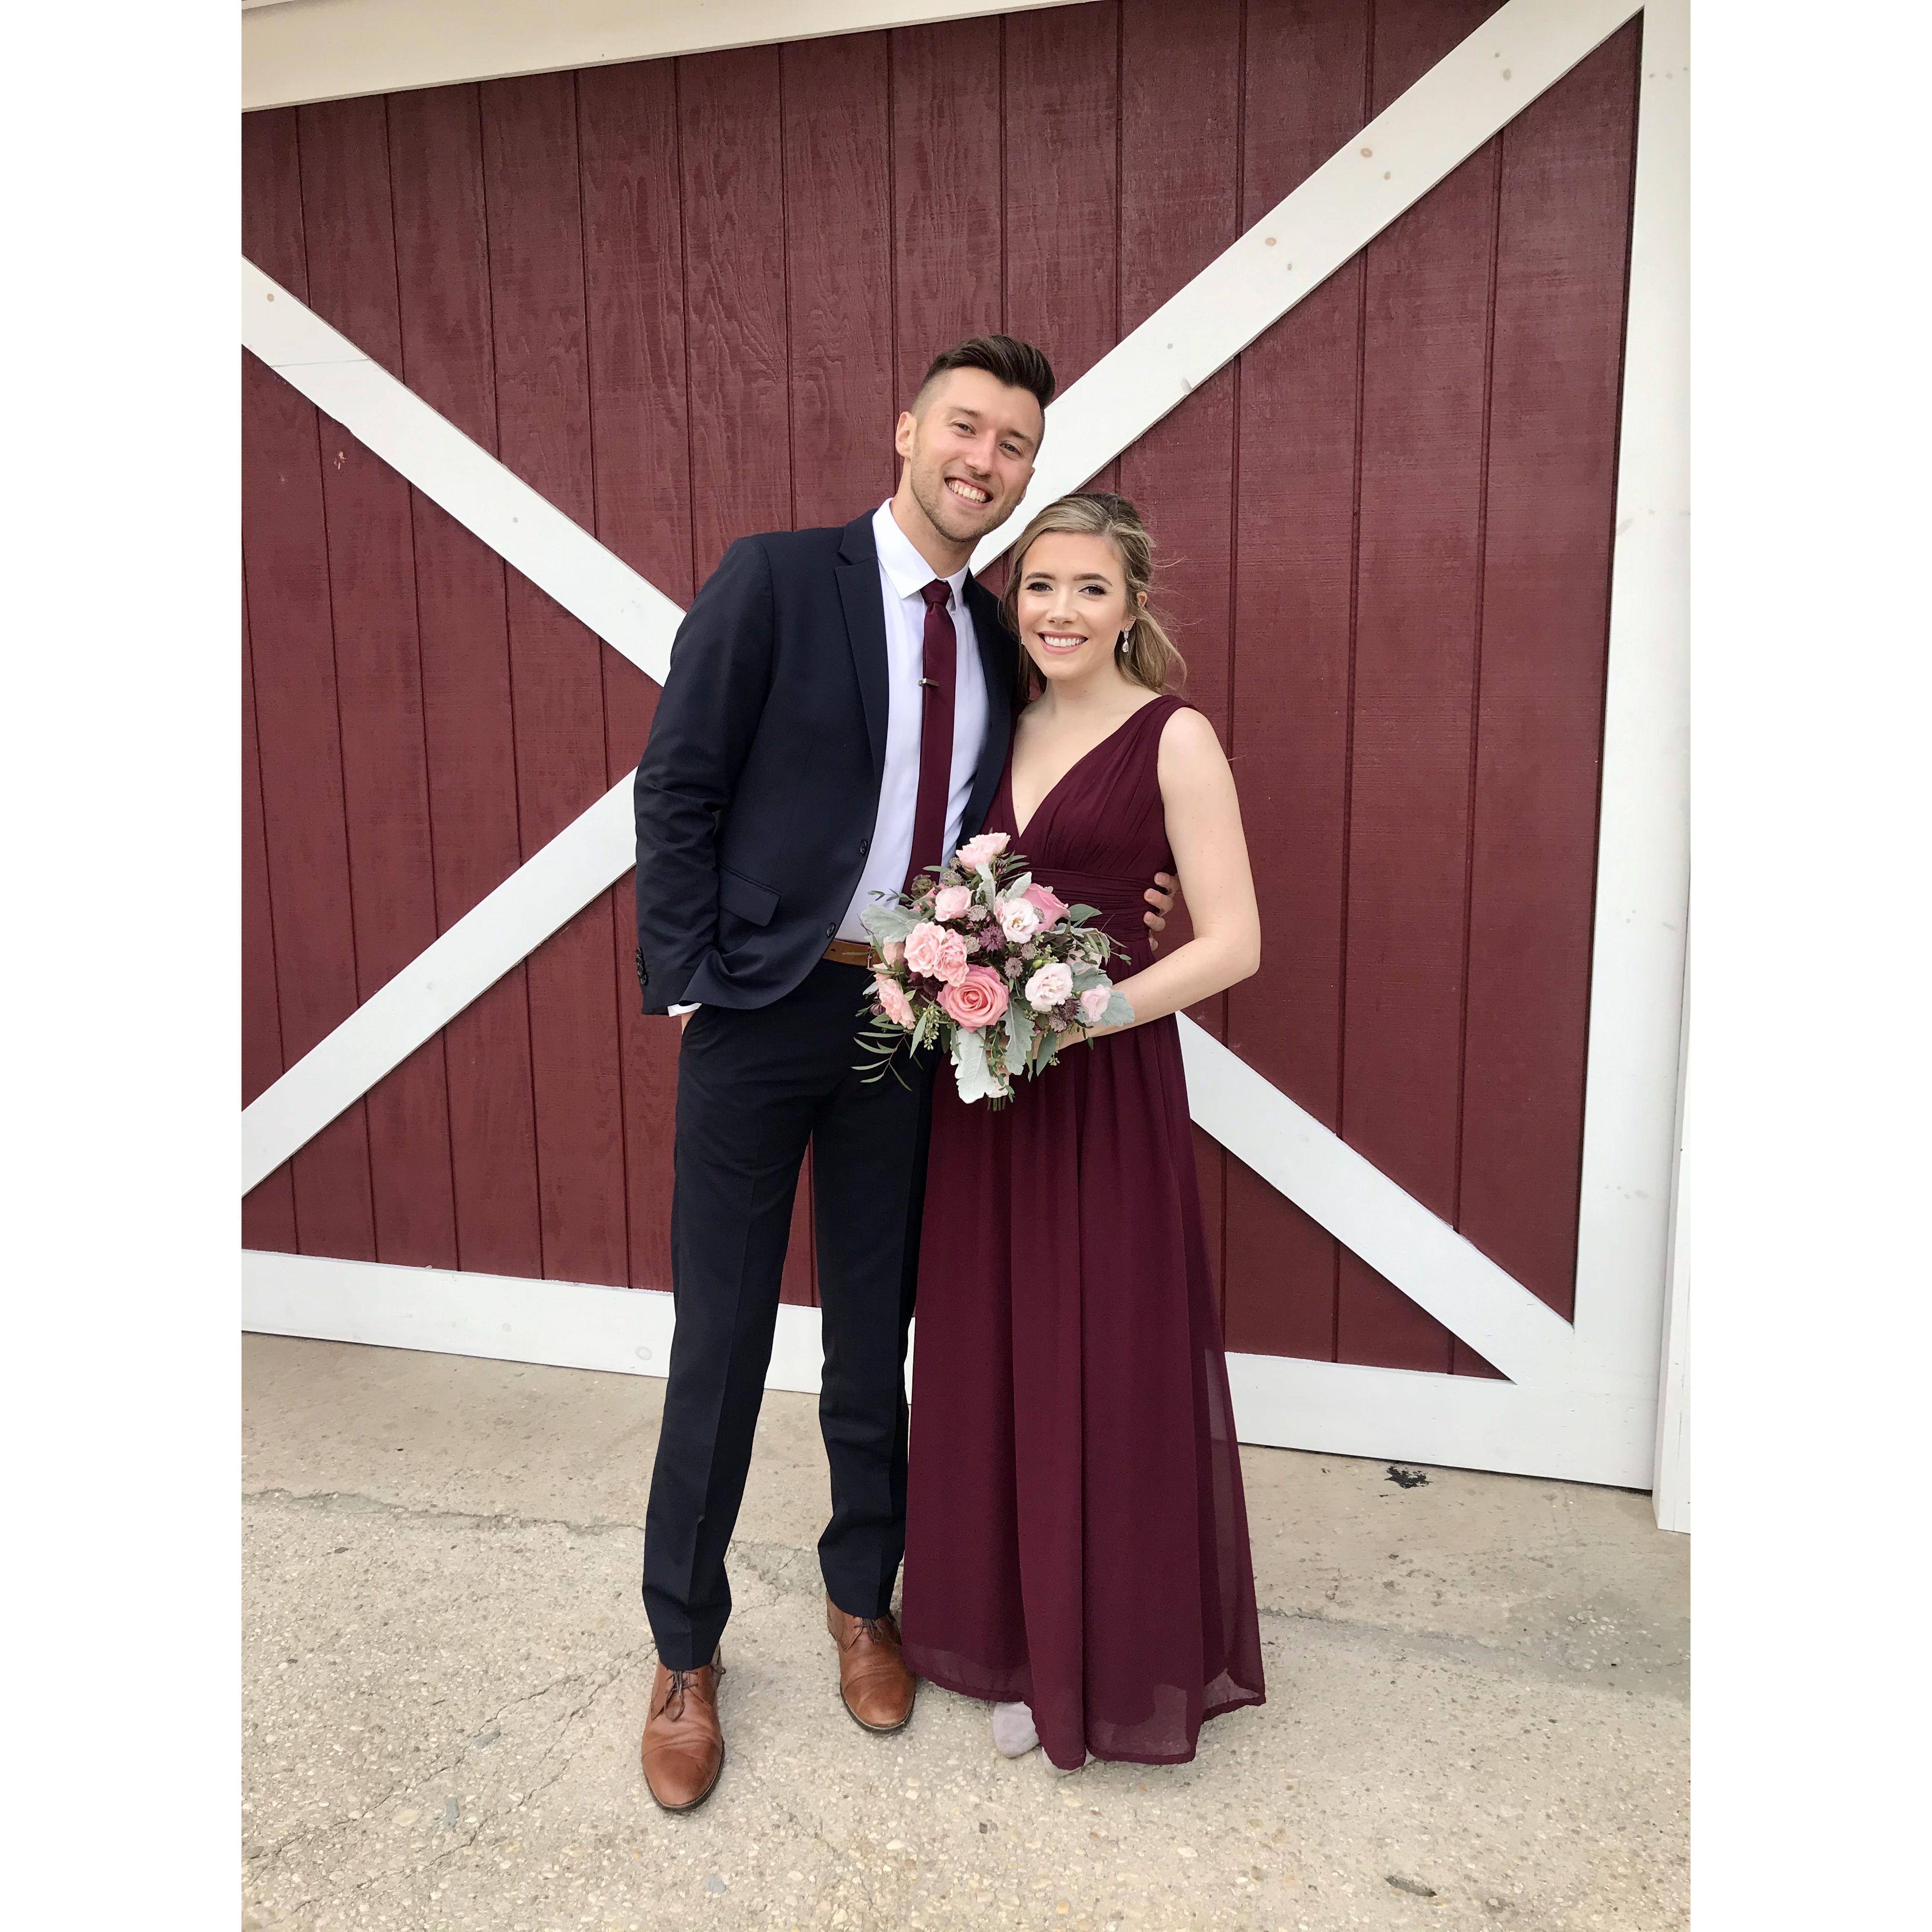 Tori & Avery's Wedding - Dewey Beach, DE 2019